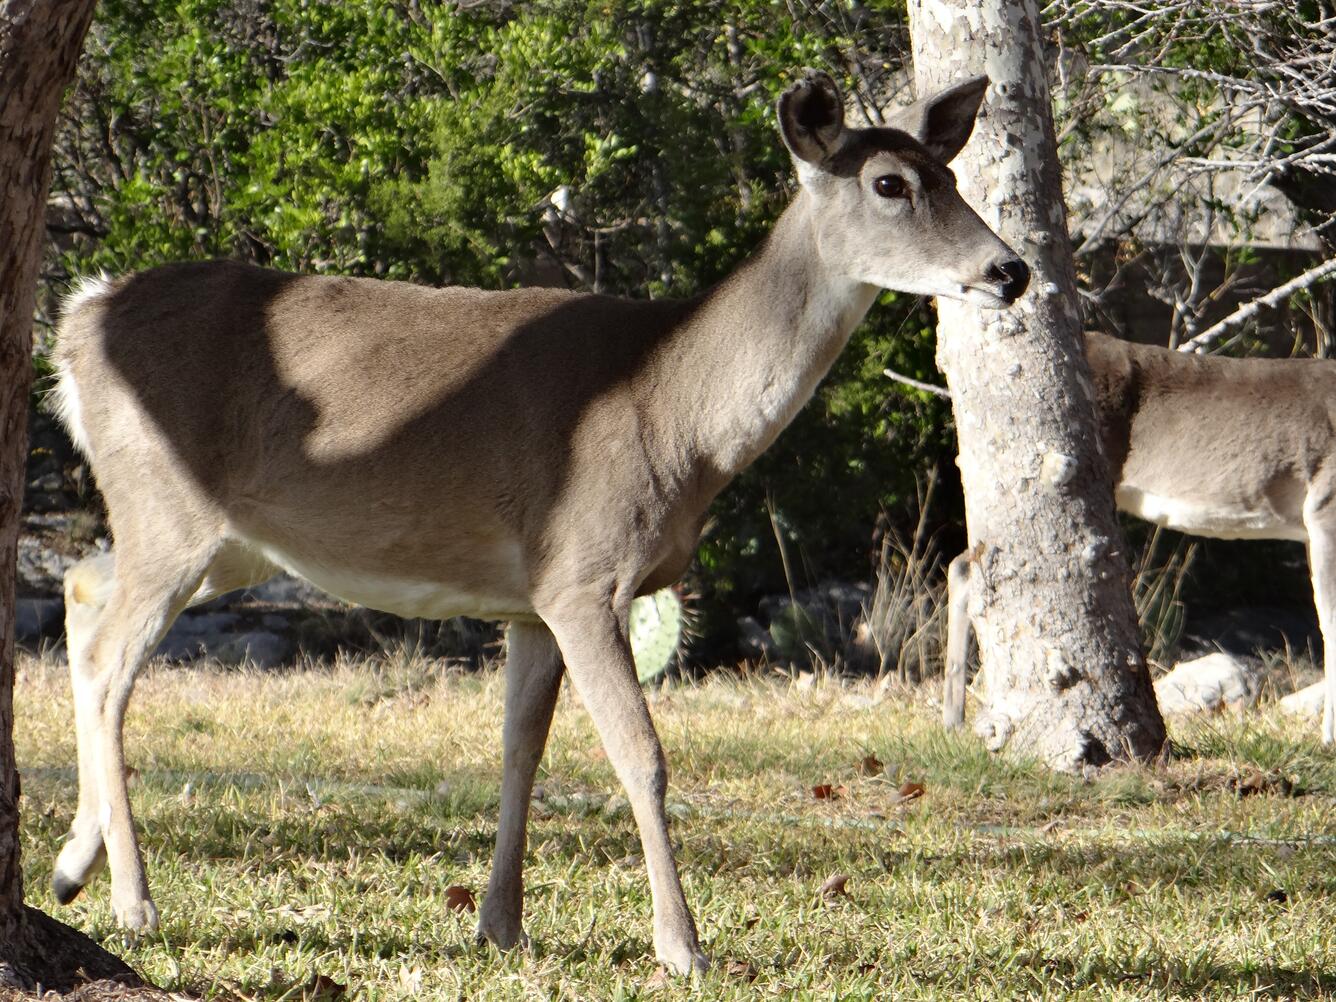 Image shows a female mule deer grazing in a grassy field near trees